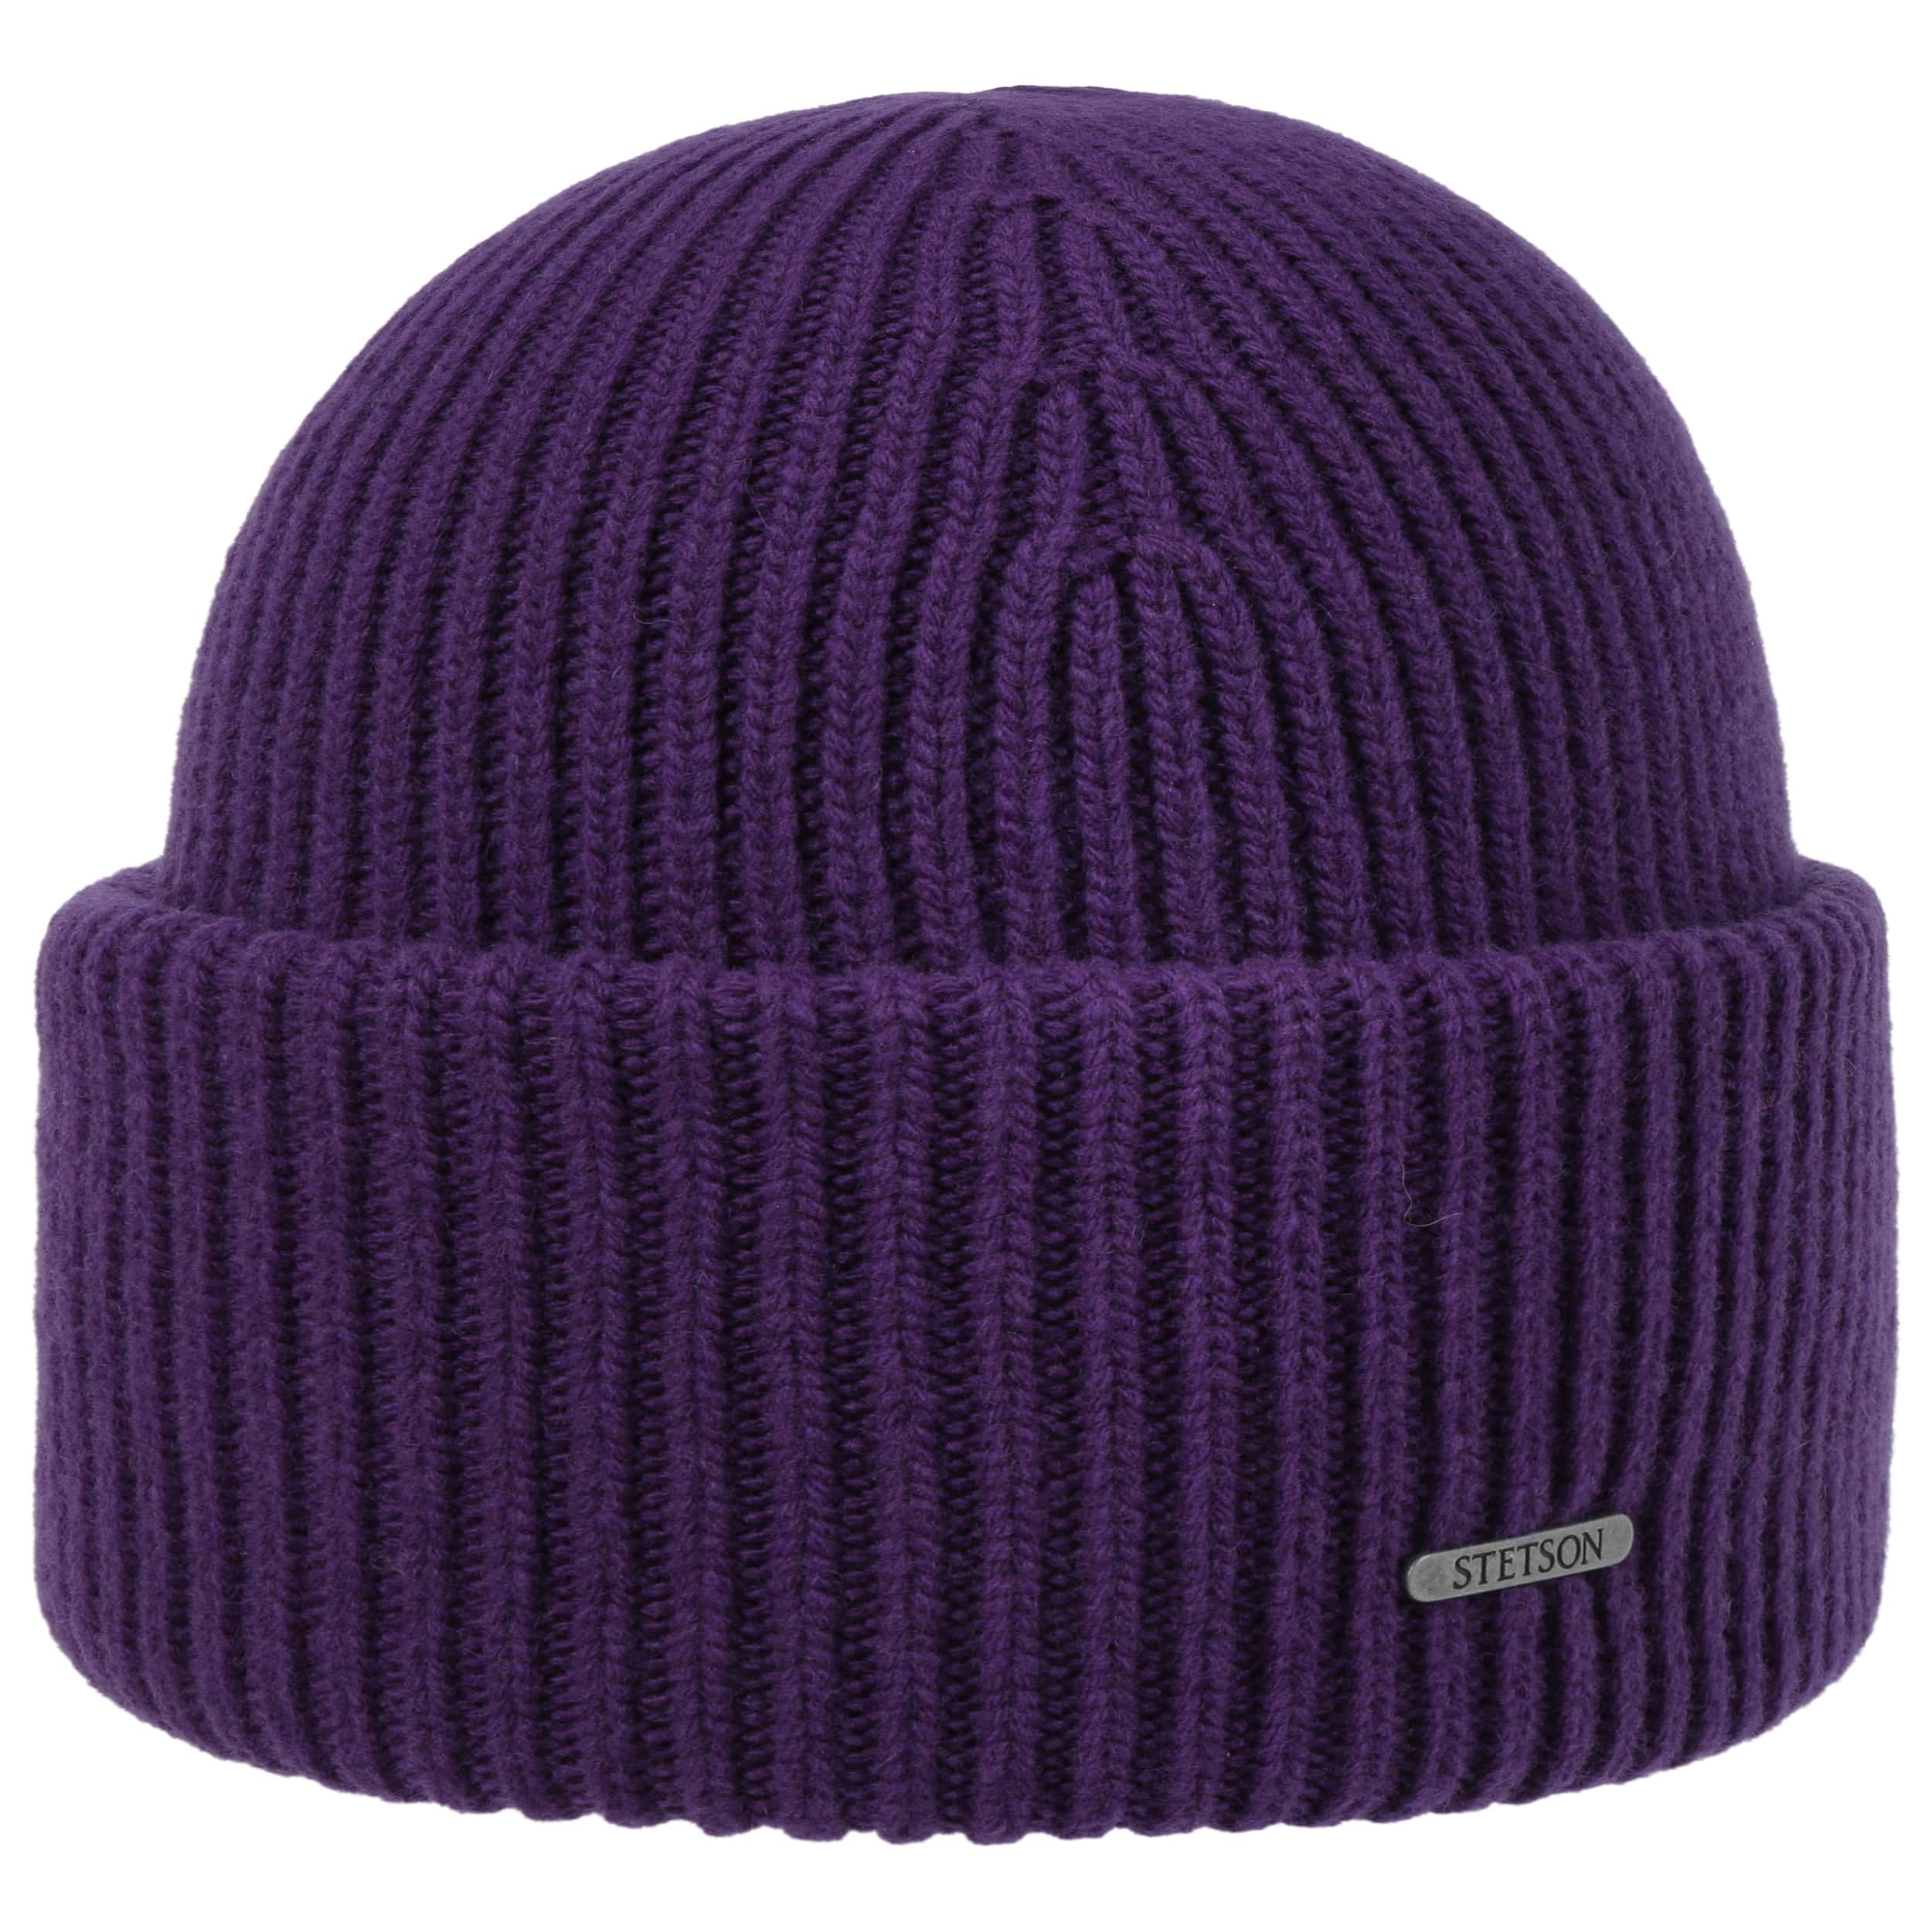 Classic Uni Wool Beanie Hat by Stetson - 79,00 €